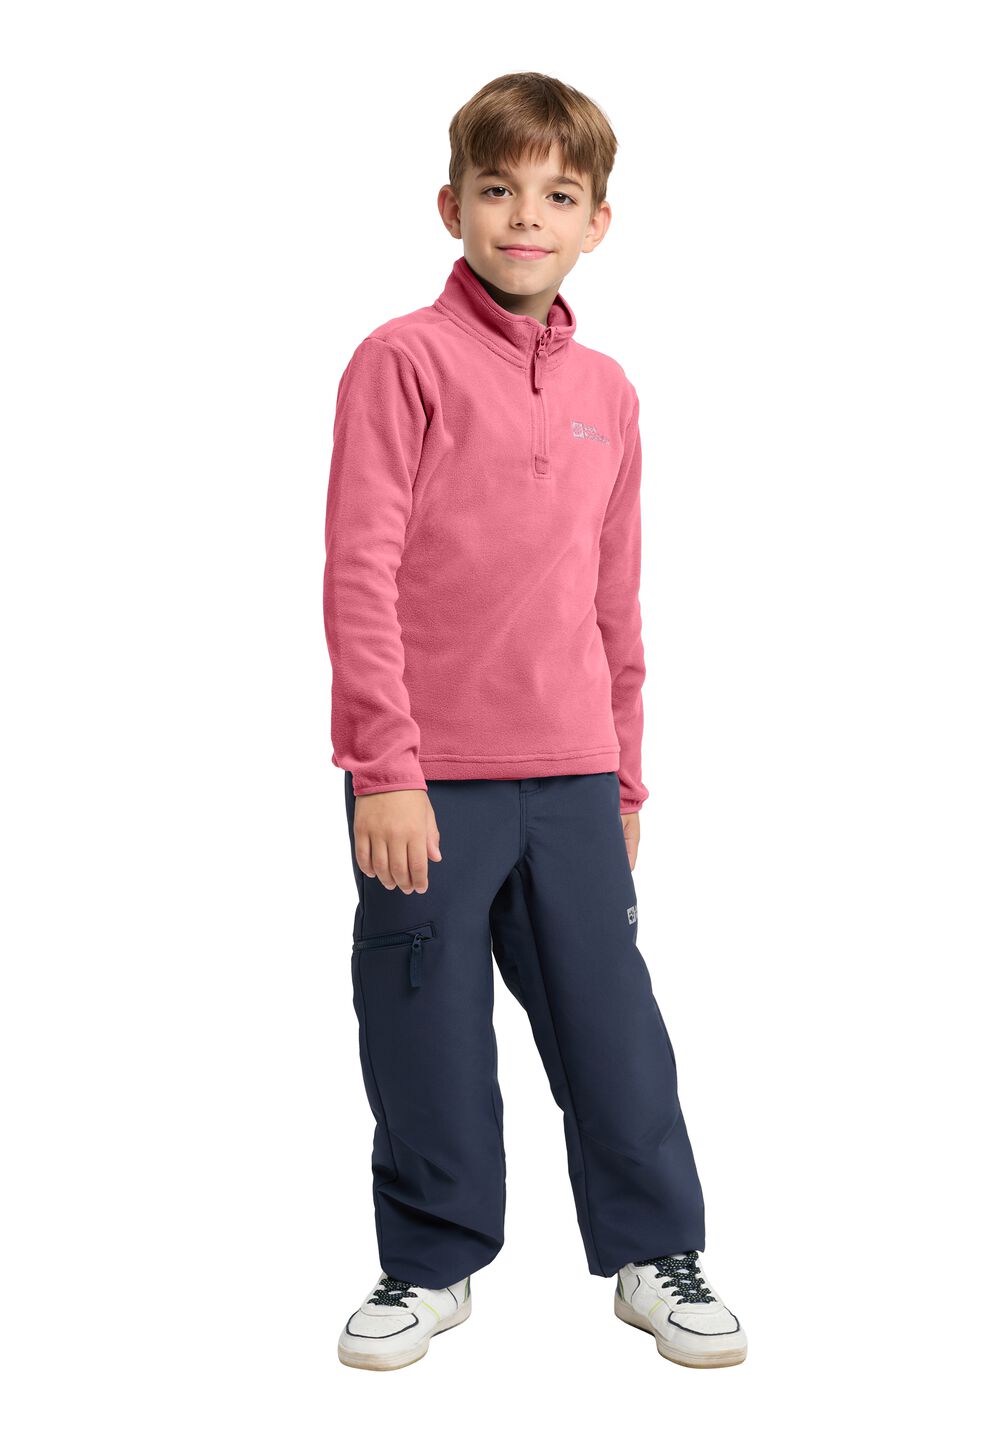 Jack Wolfskin Fleecepullover Kinder Taunus Halfzip Kids 104 soft pink soft pink von Jack Wolfskin